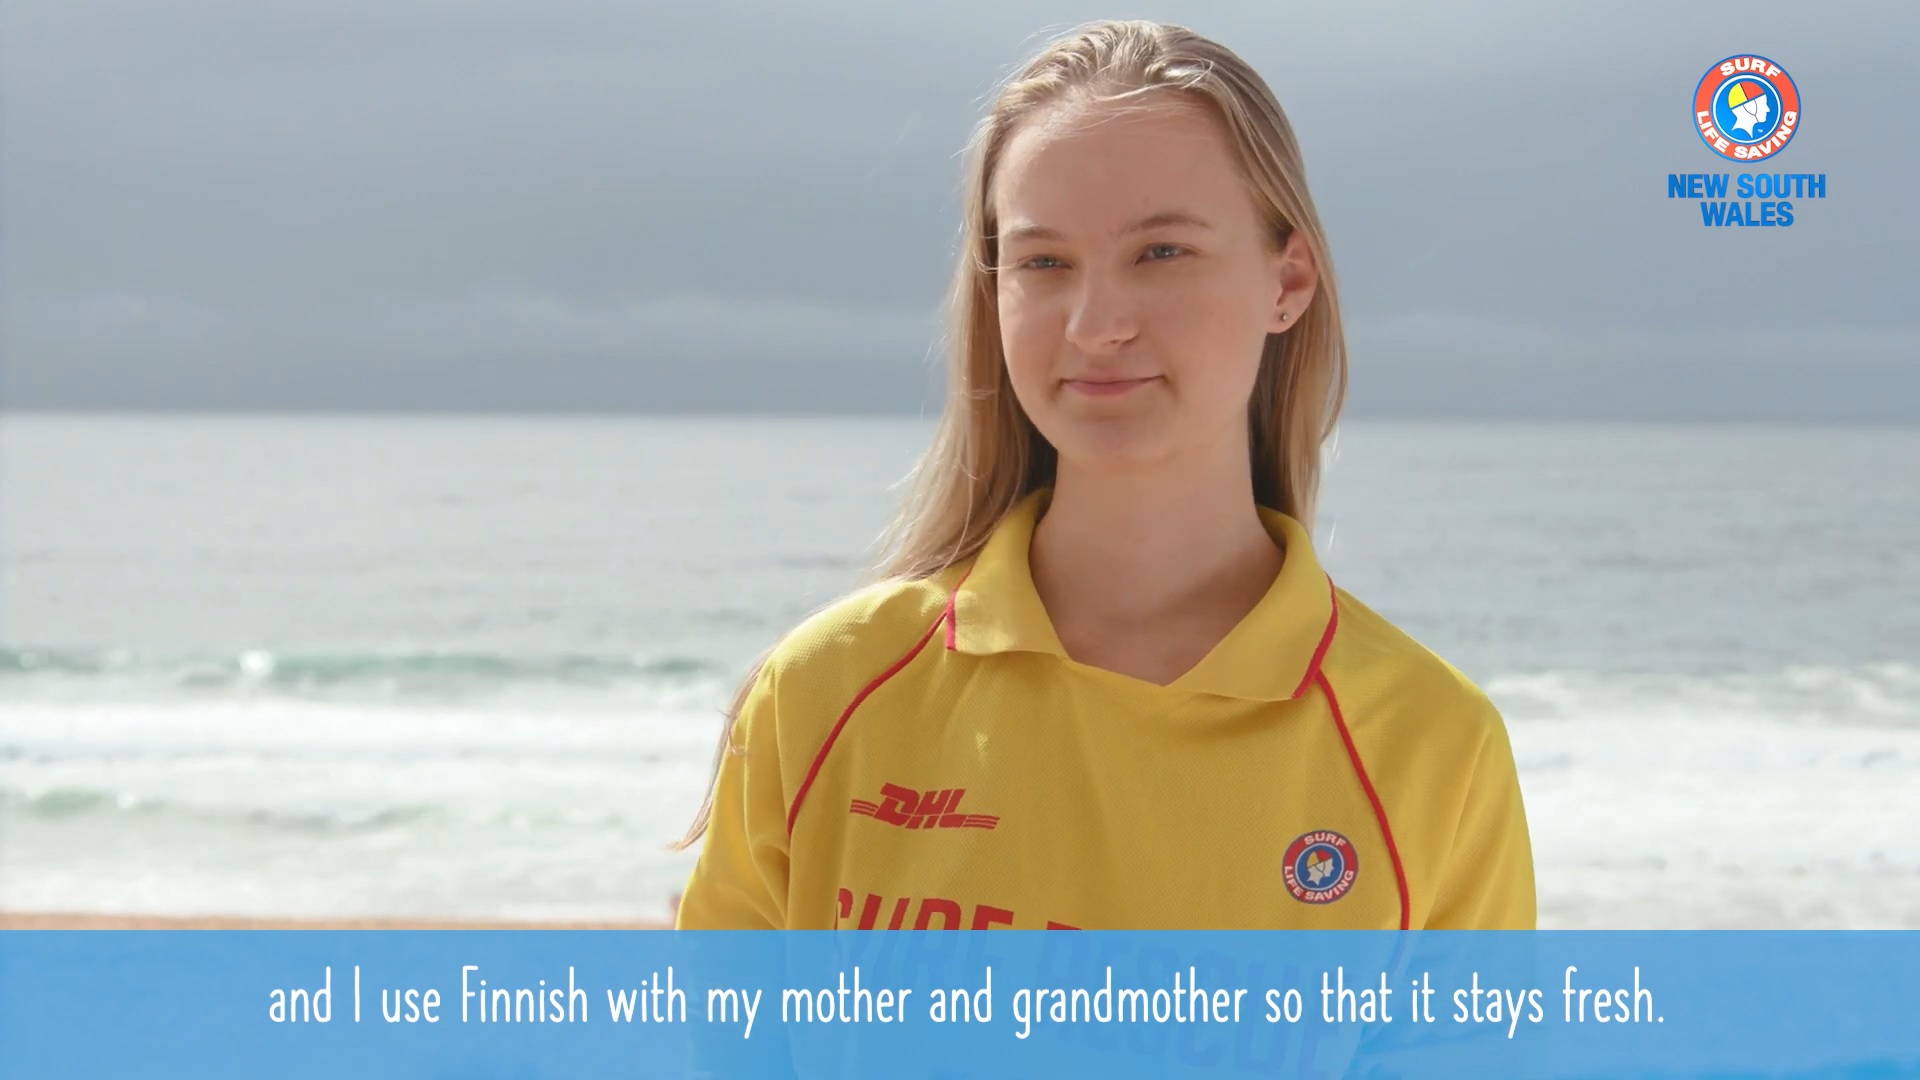 Meet A Lifesaver - Annikka Burge